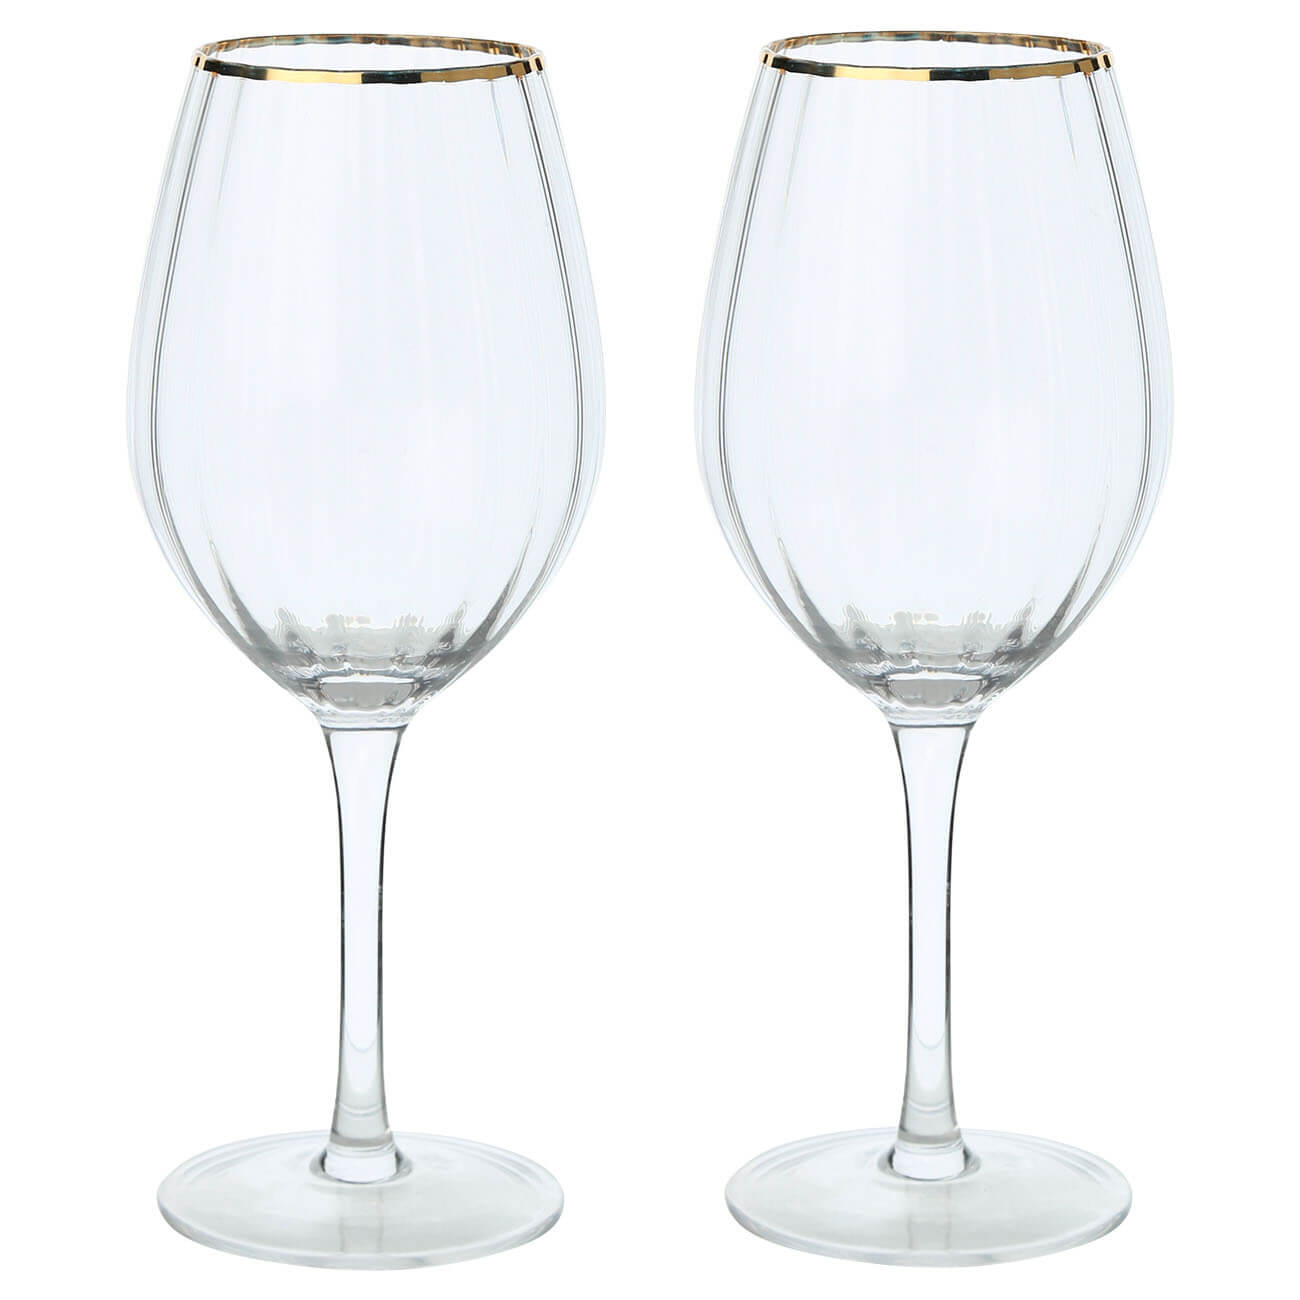 Бокал для вина, 530 мл, 2 шт, стекло, с золотистым кантом, Lombardy R Gold ваза для ов 30 см стекло с золотистым кантом ripply gold